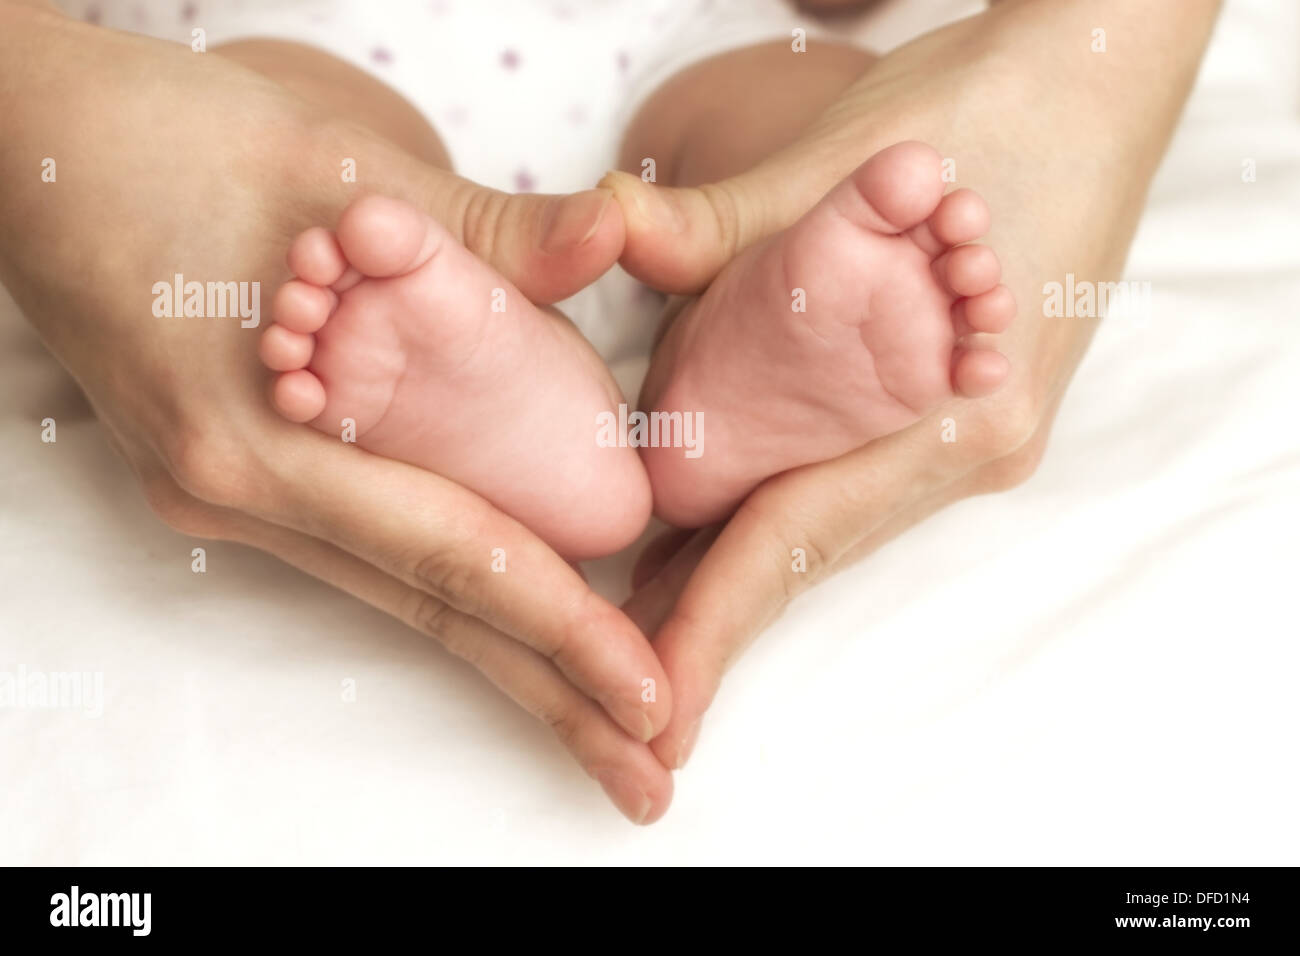 Newborn baby feet in the mother hands Stock Photo